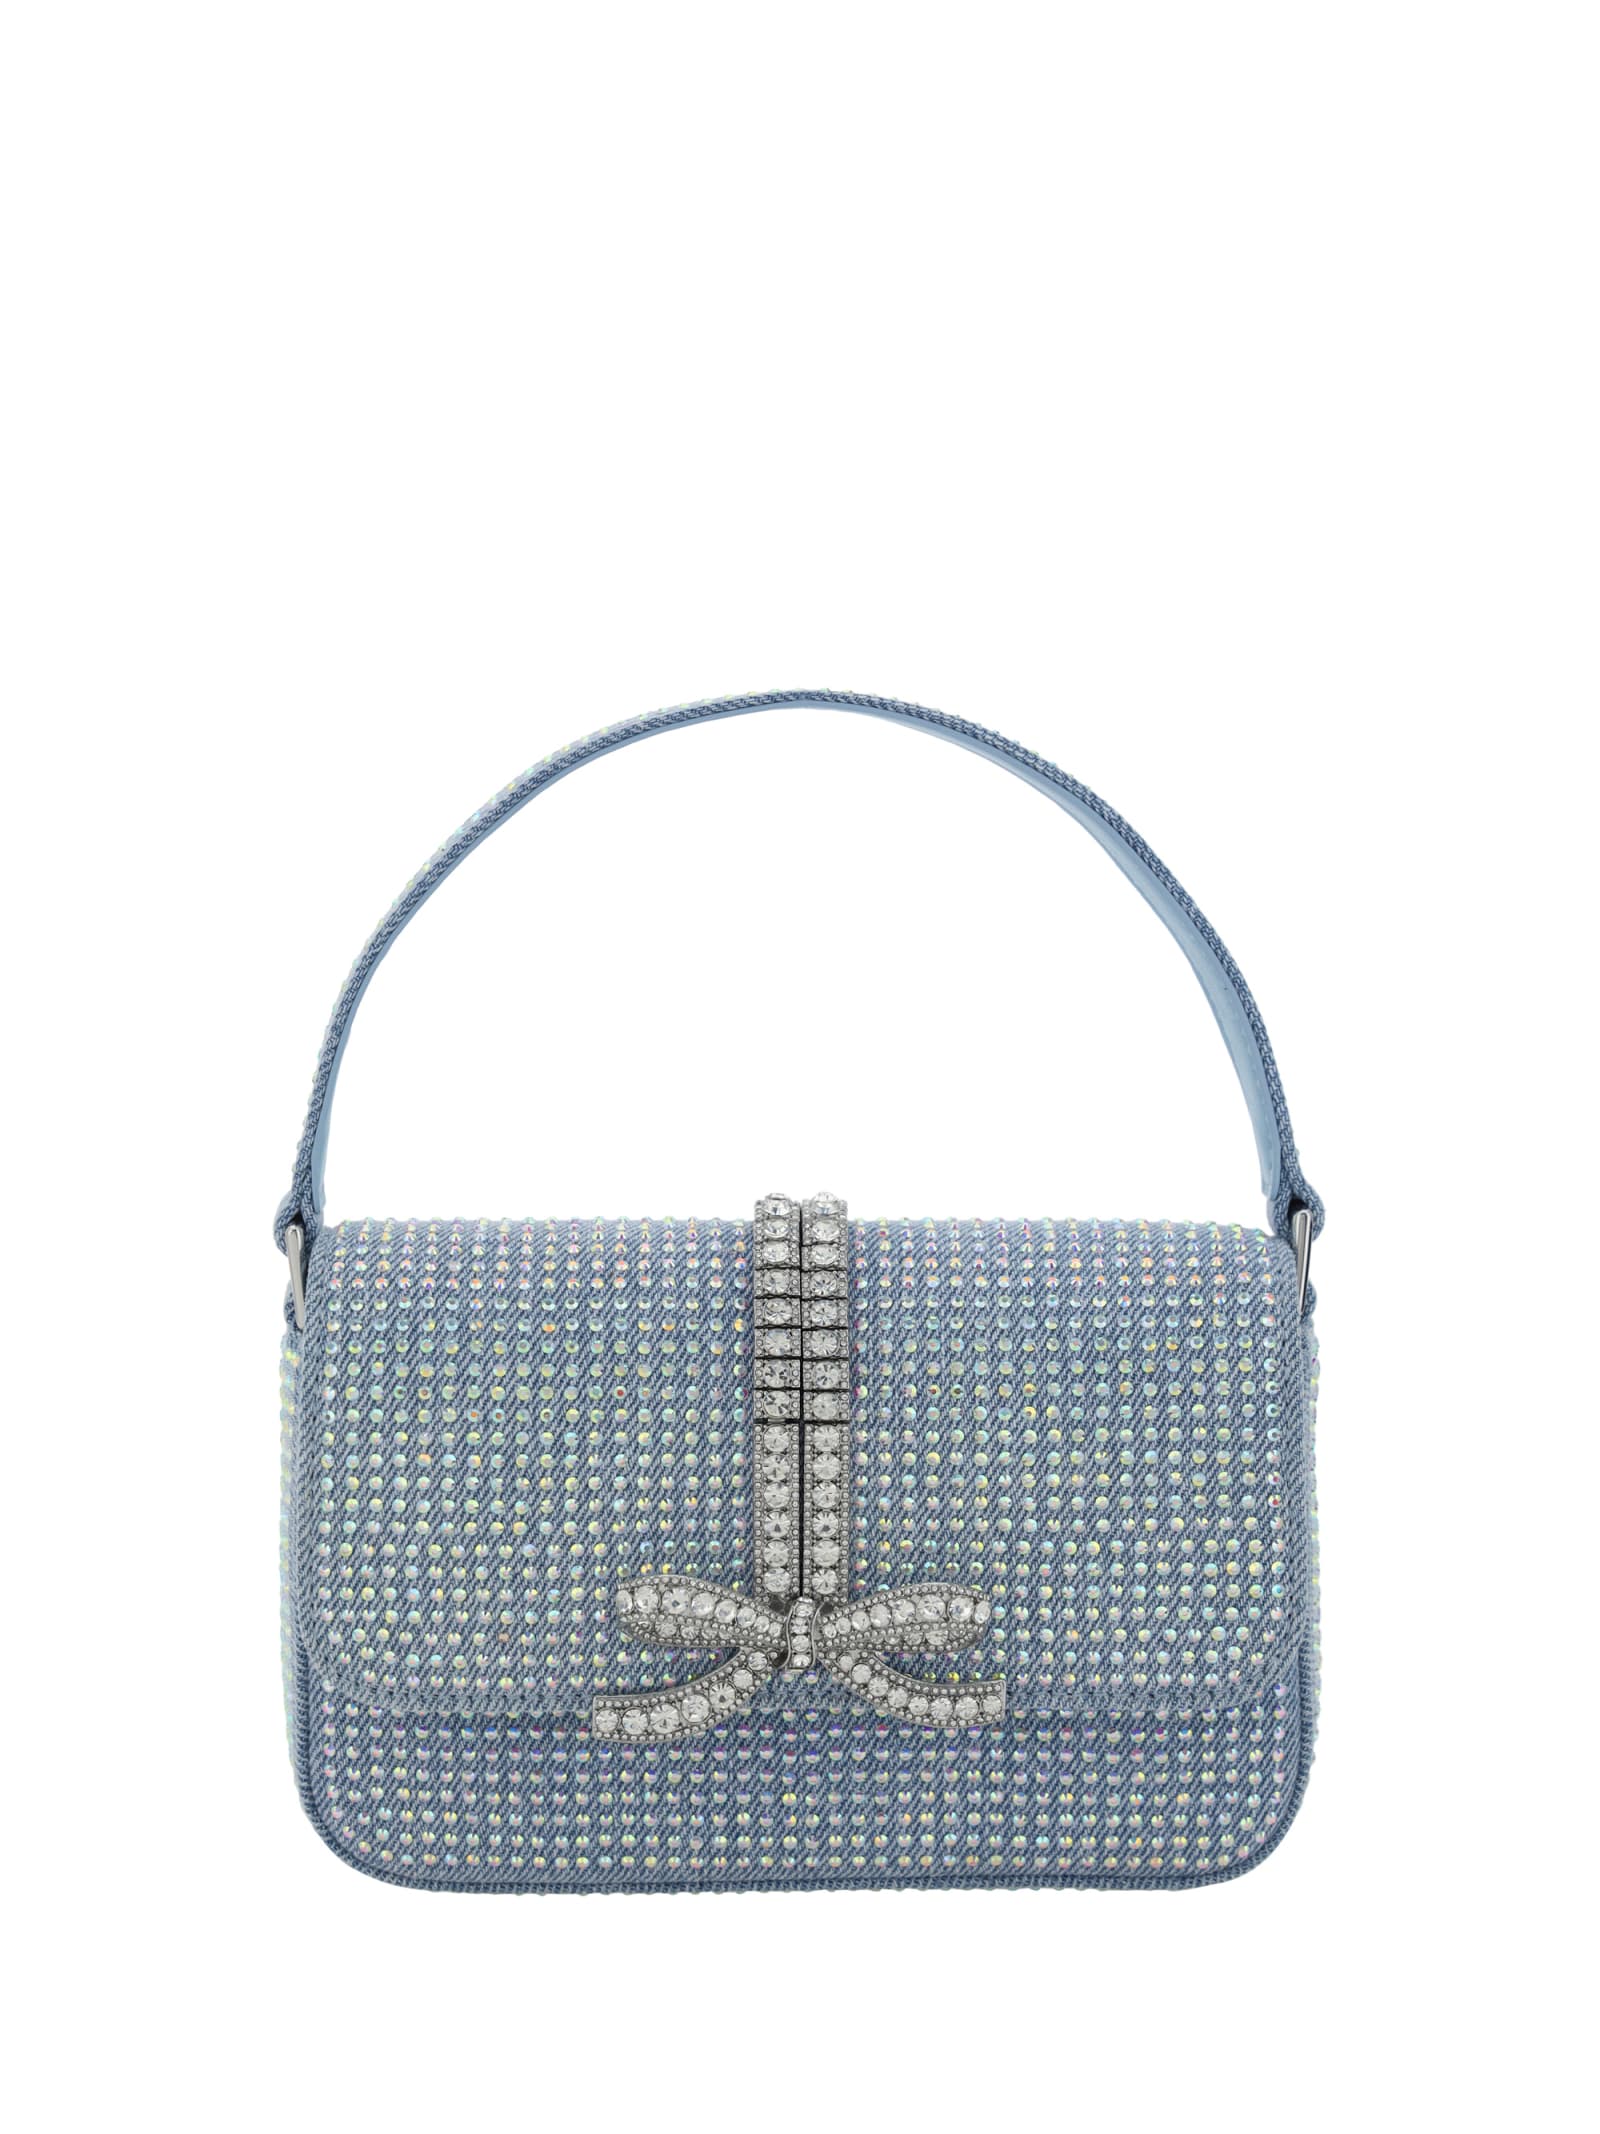 Self-portrait Baguette Handbag In Blue